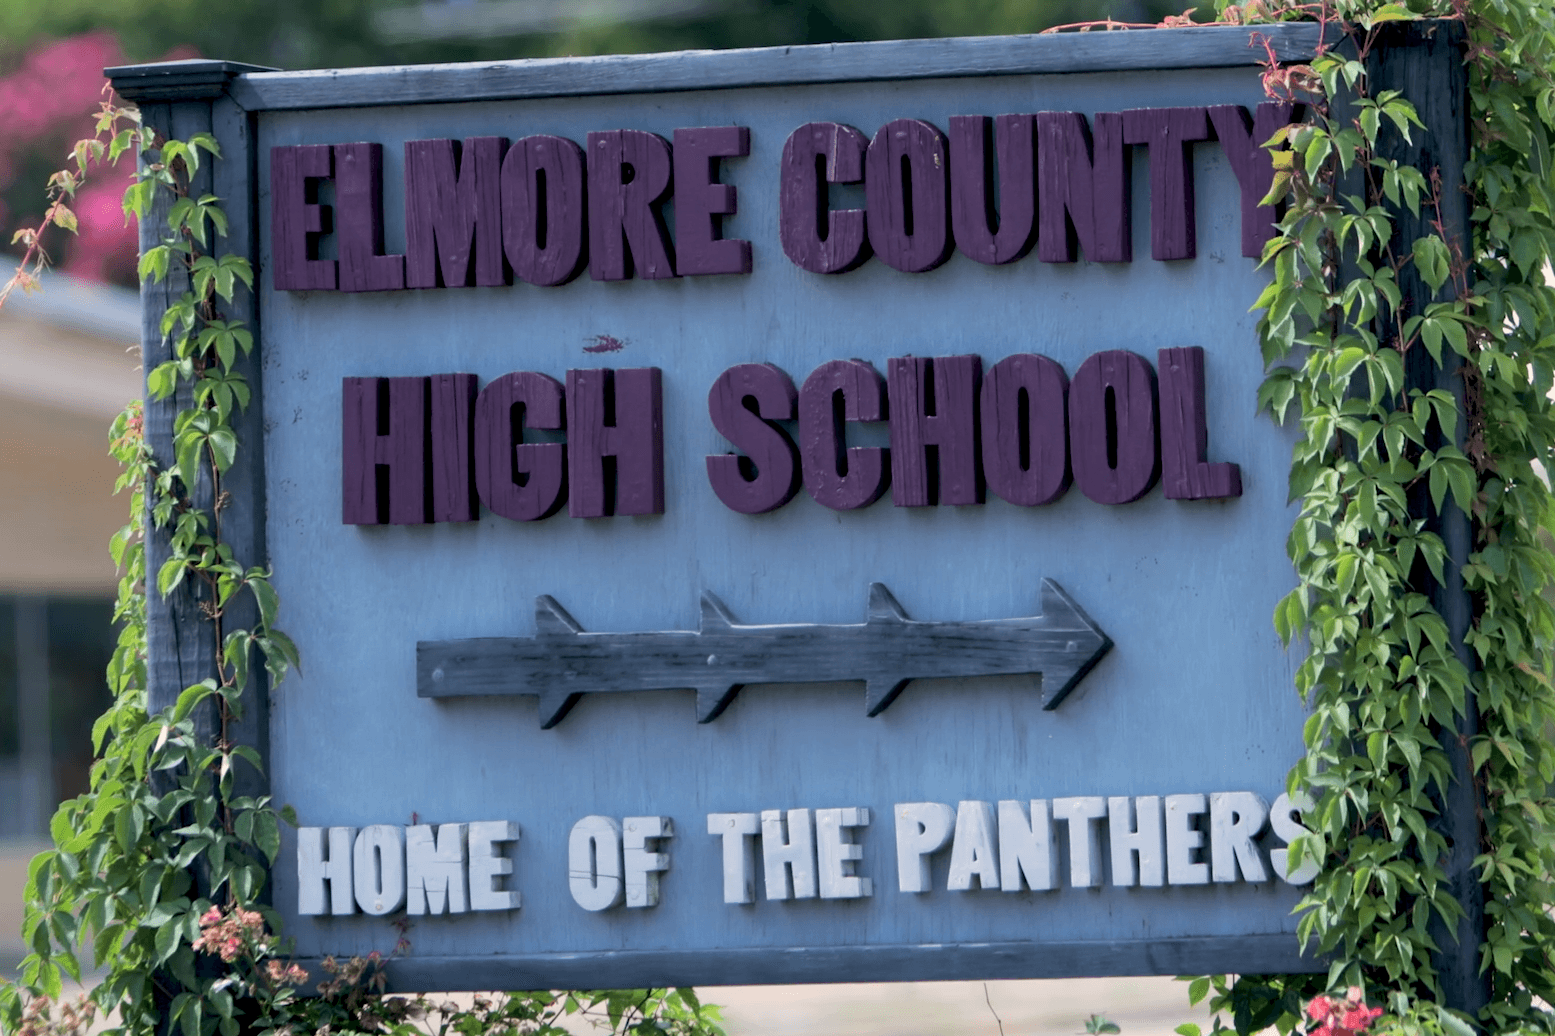 Elmore County High School